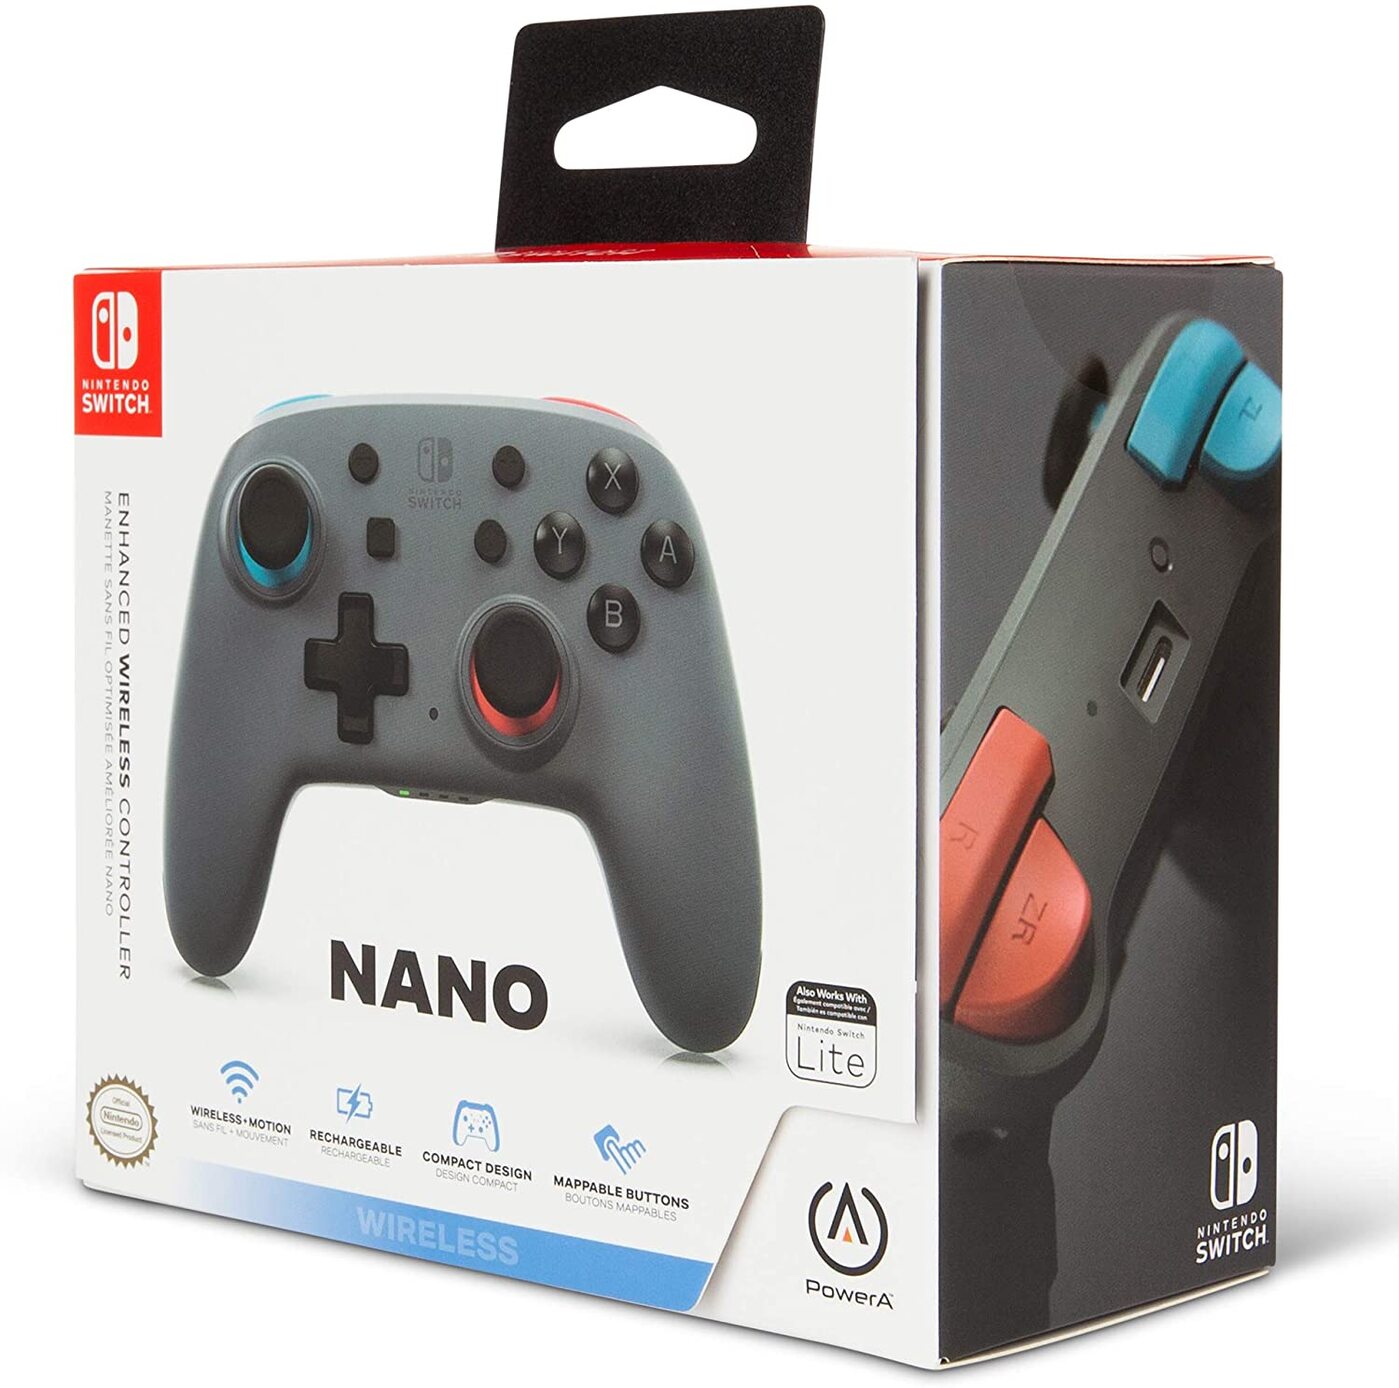 Nano Enhanced Wireless Controller For Nintendo Switch – Grey/Neon